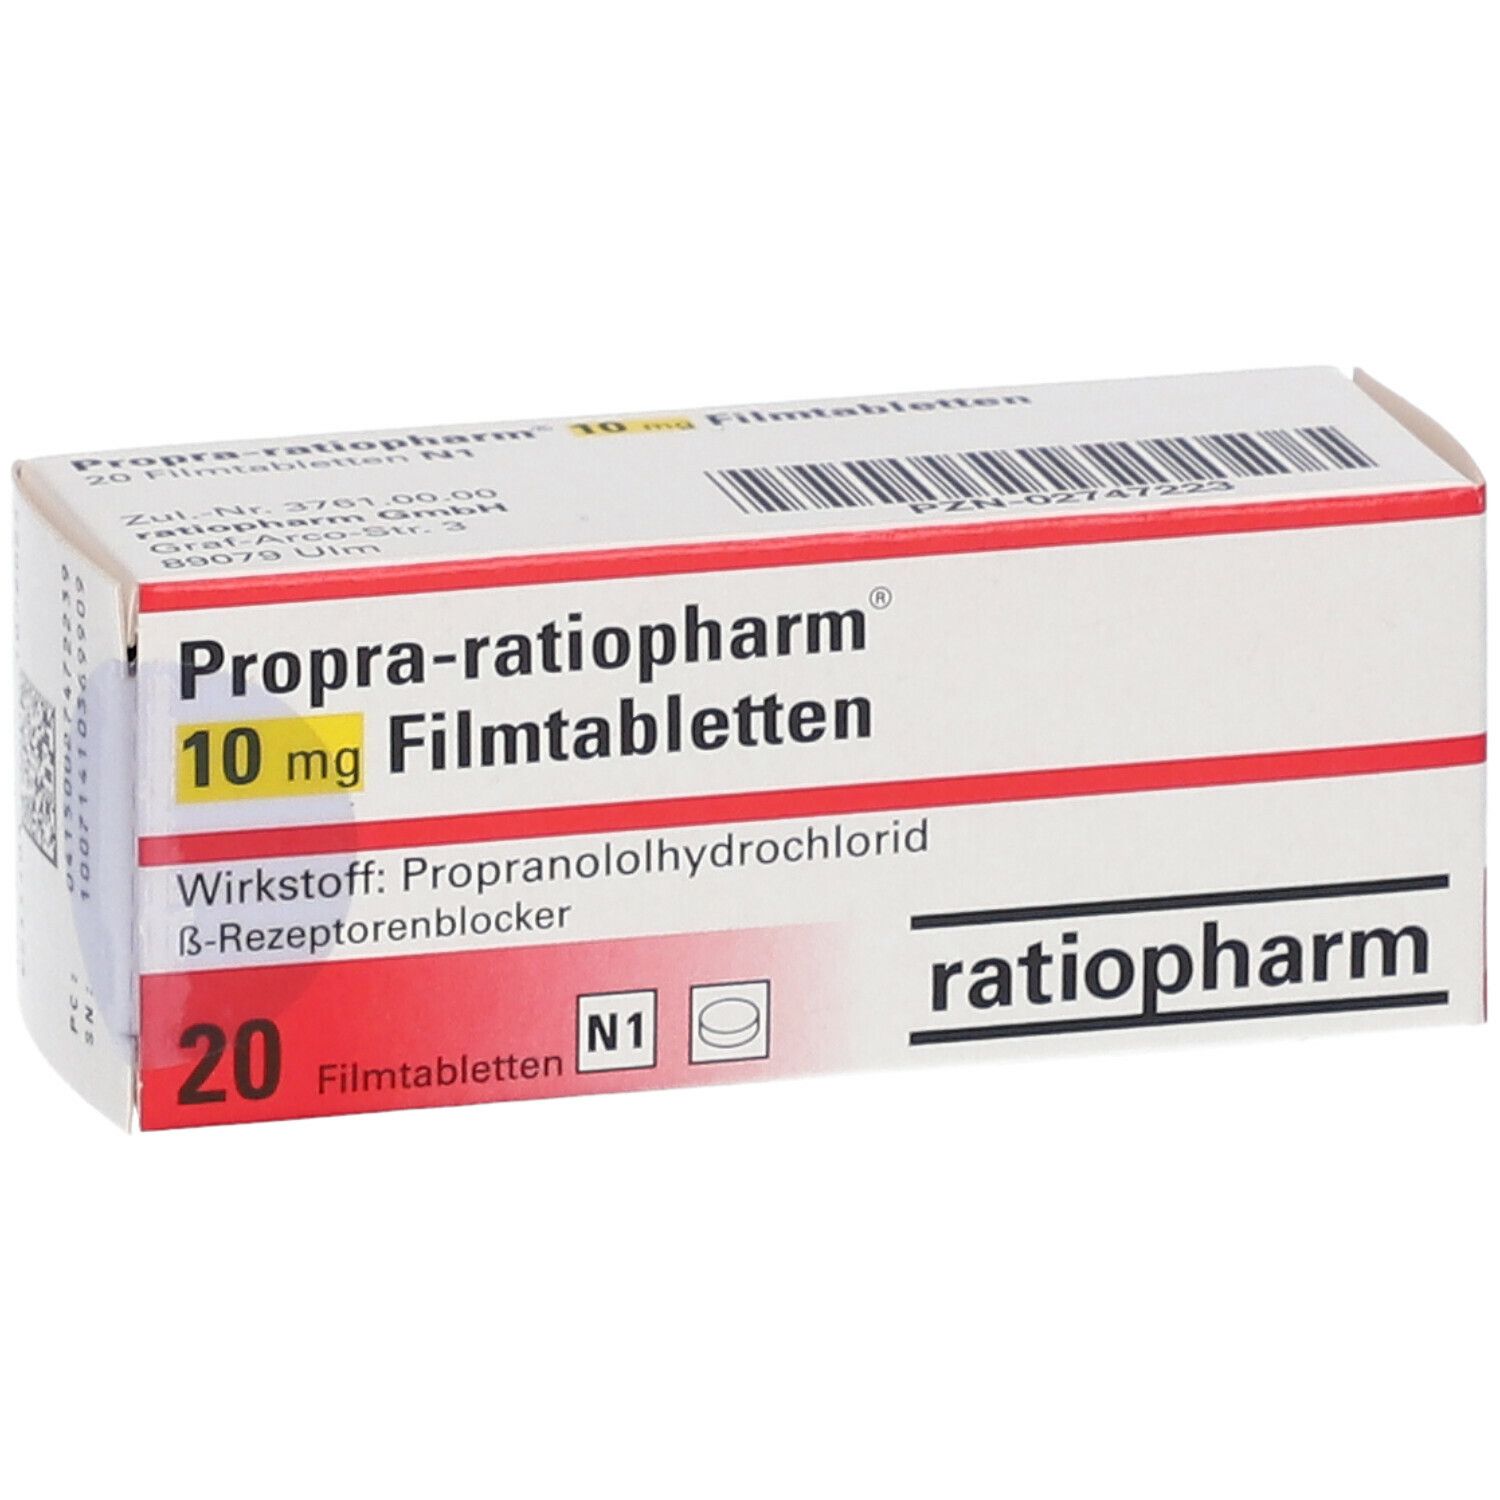 Propra-ratiopharm® 10 mg